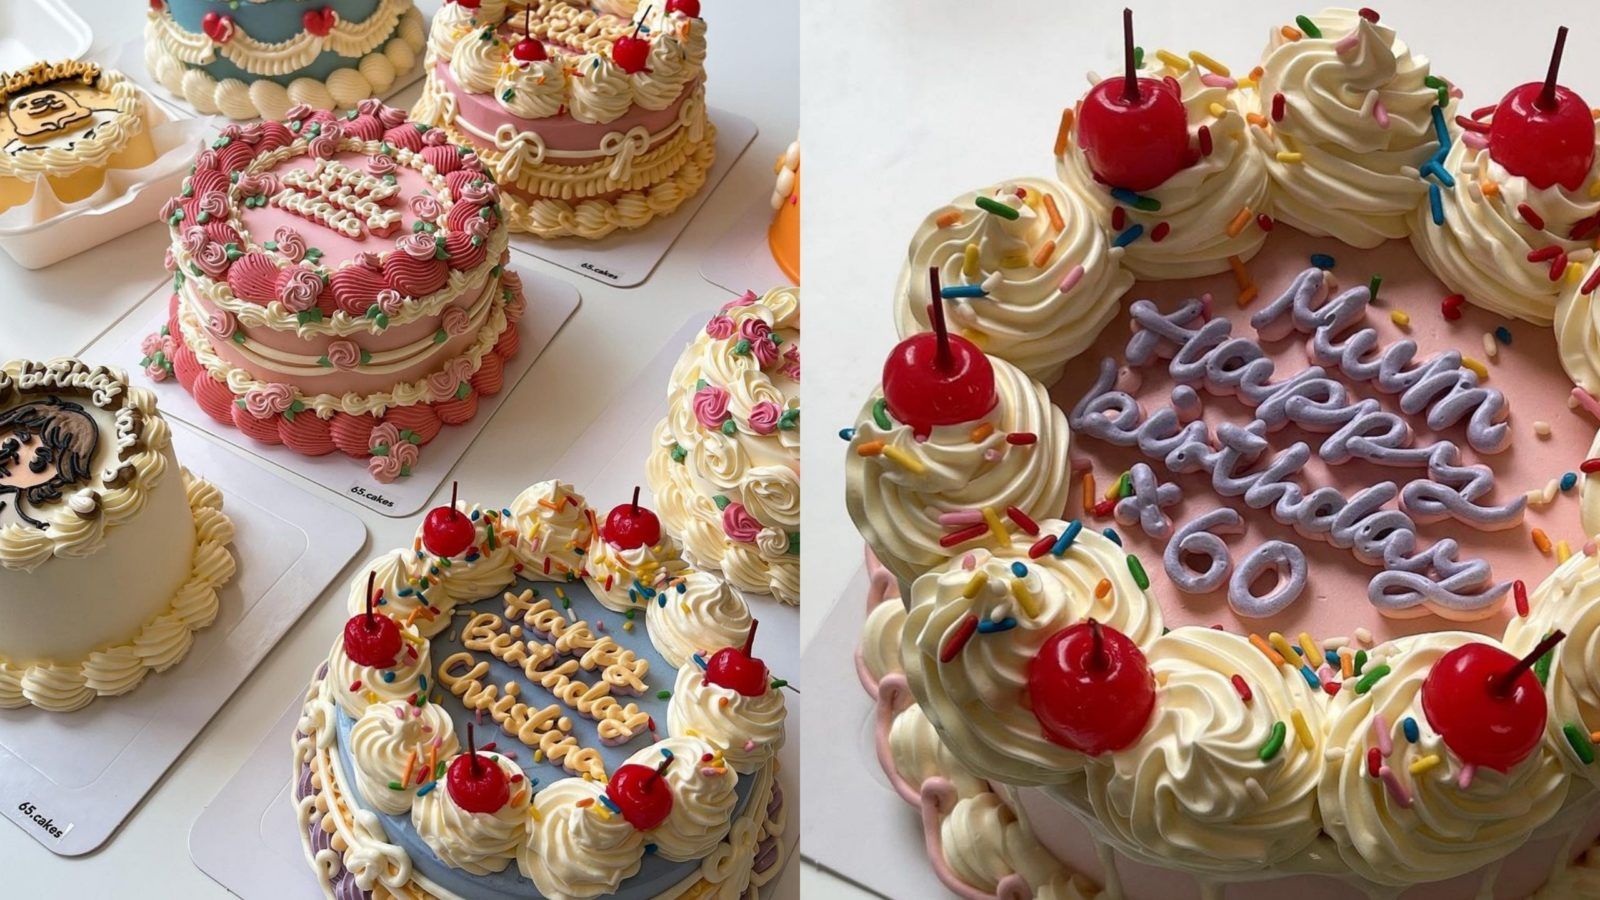 Bespoke Korean-Style Cakes To Order From Instagram In Hong Kong